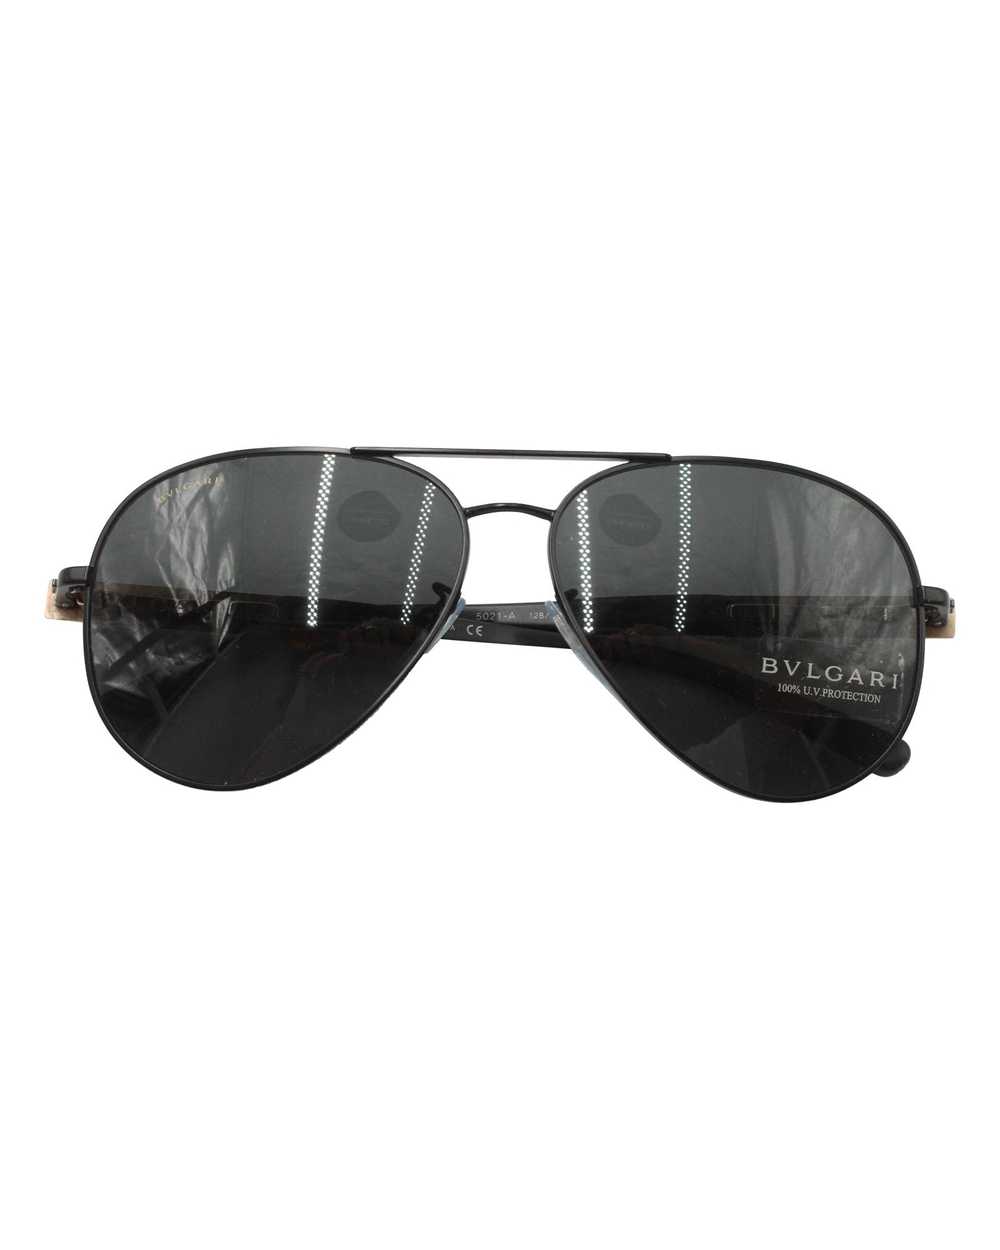 Product Details Bvlgari Black Aviator Sunglasses - image 2